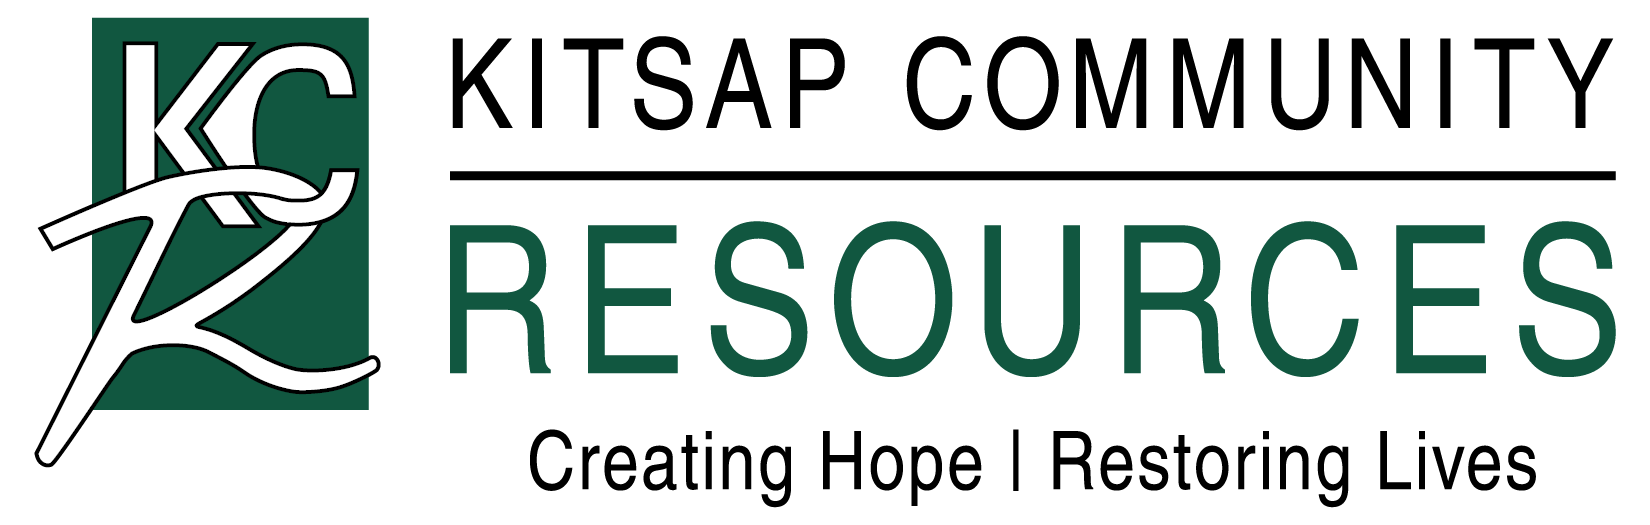 Kitsap Community Resources logo